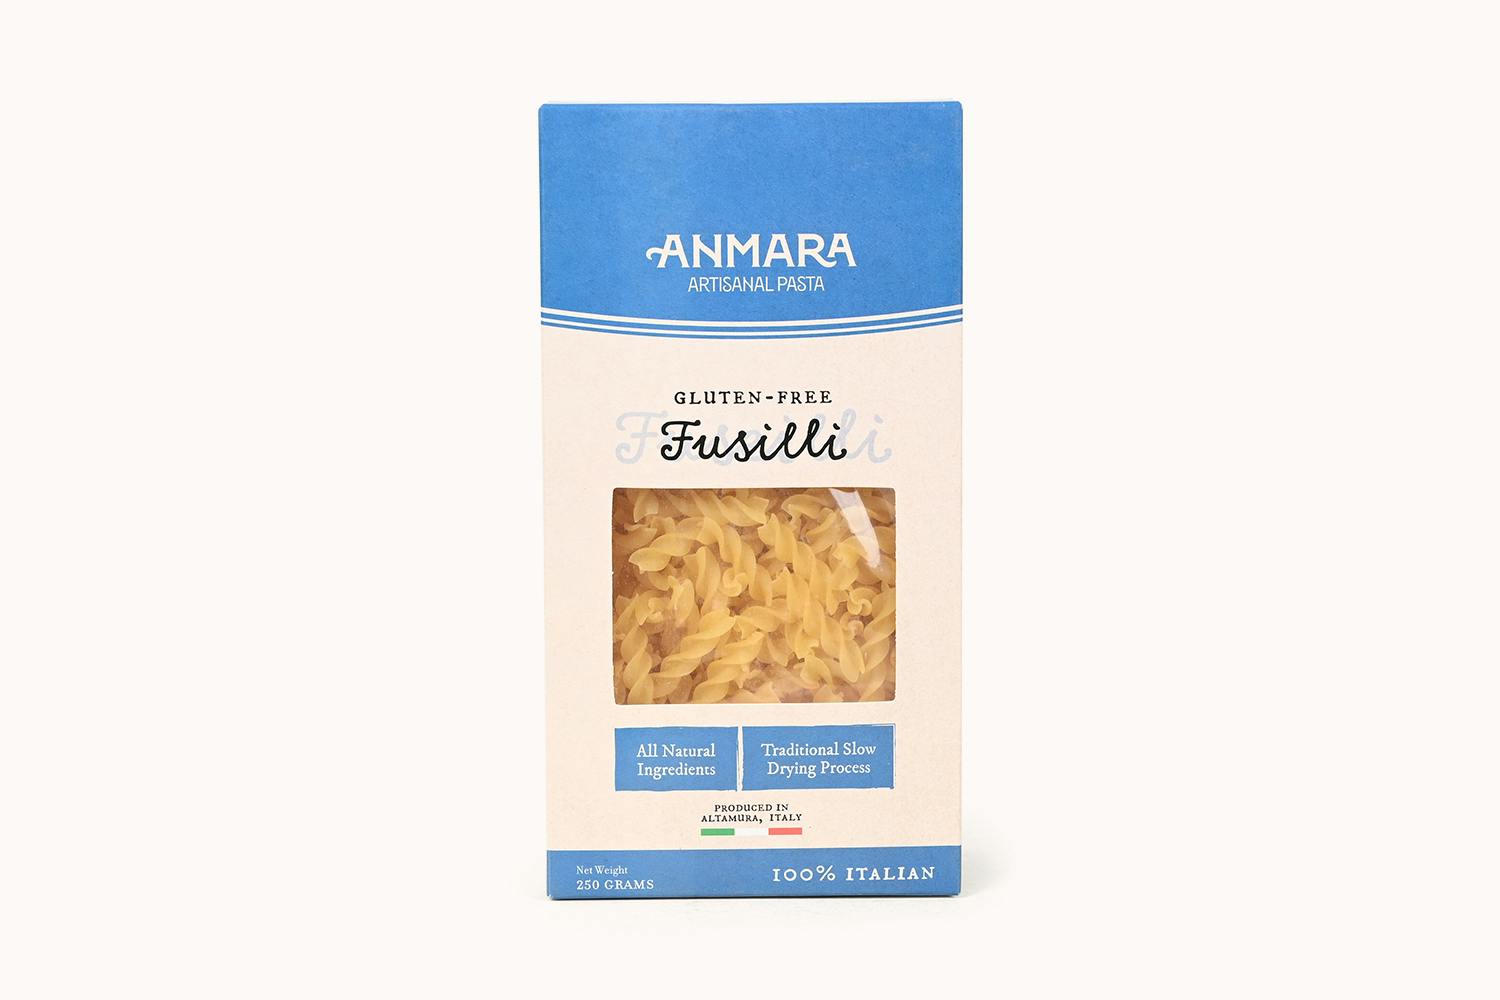 Anmara Gluten-Free Fusilli Pasta